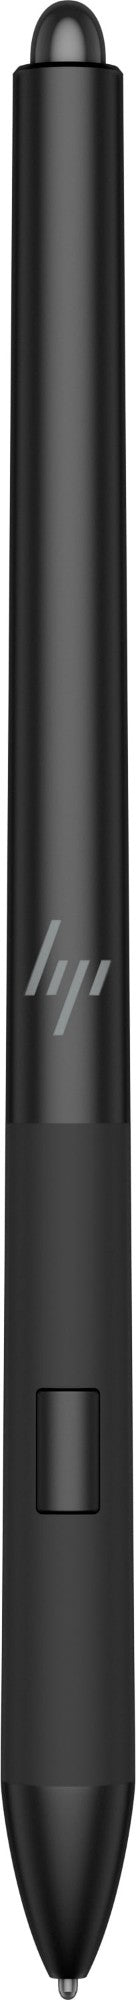 HP ZBook x2 stylus pen Black 12.3 g